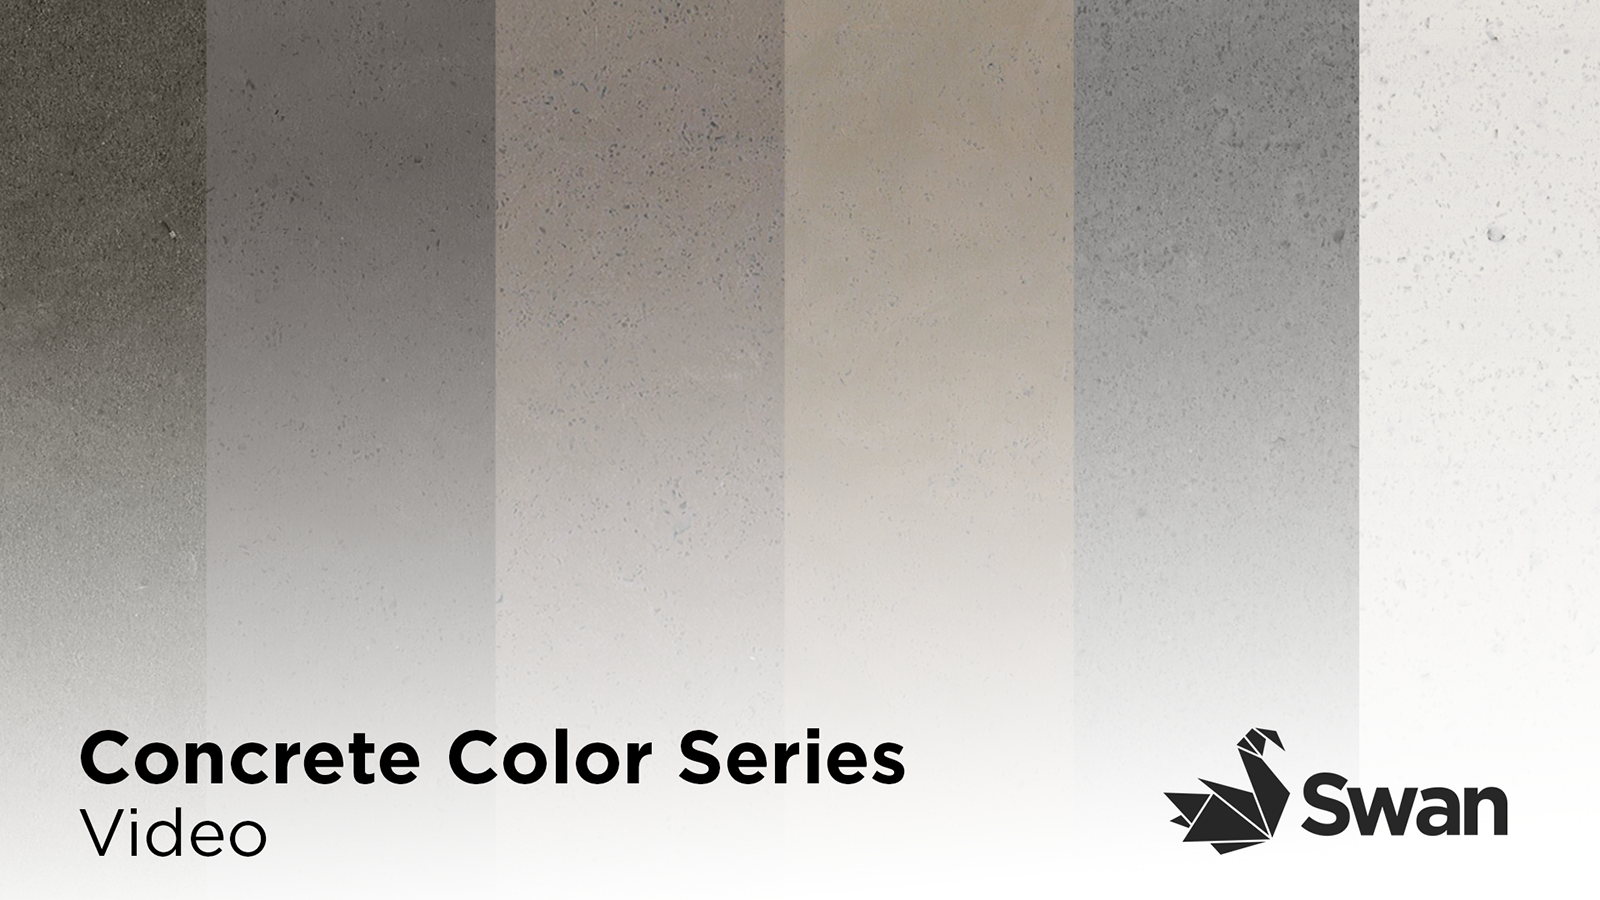 Swan concrete color series overview